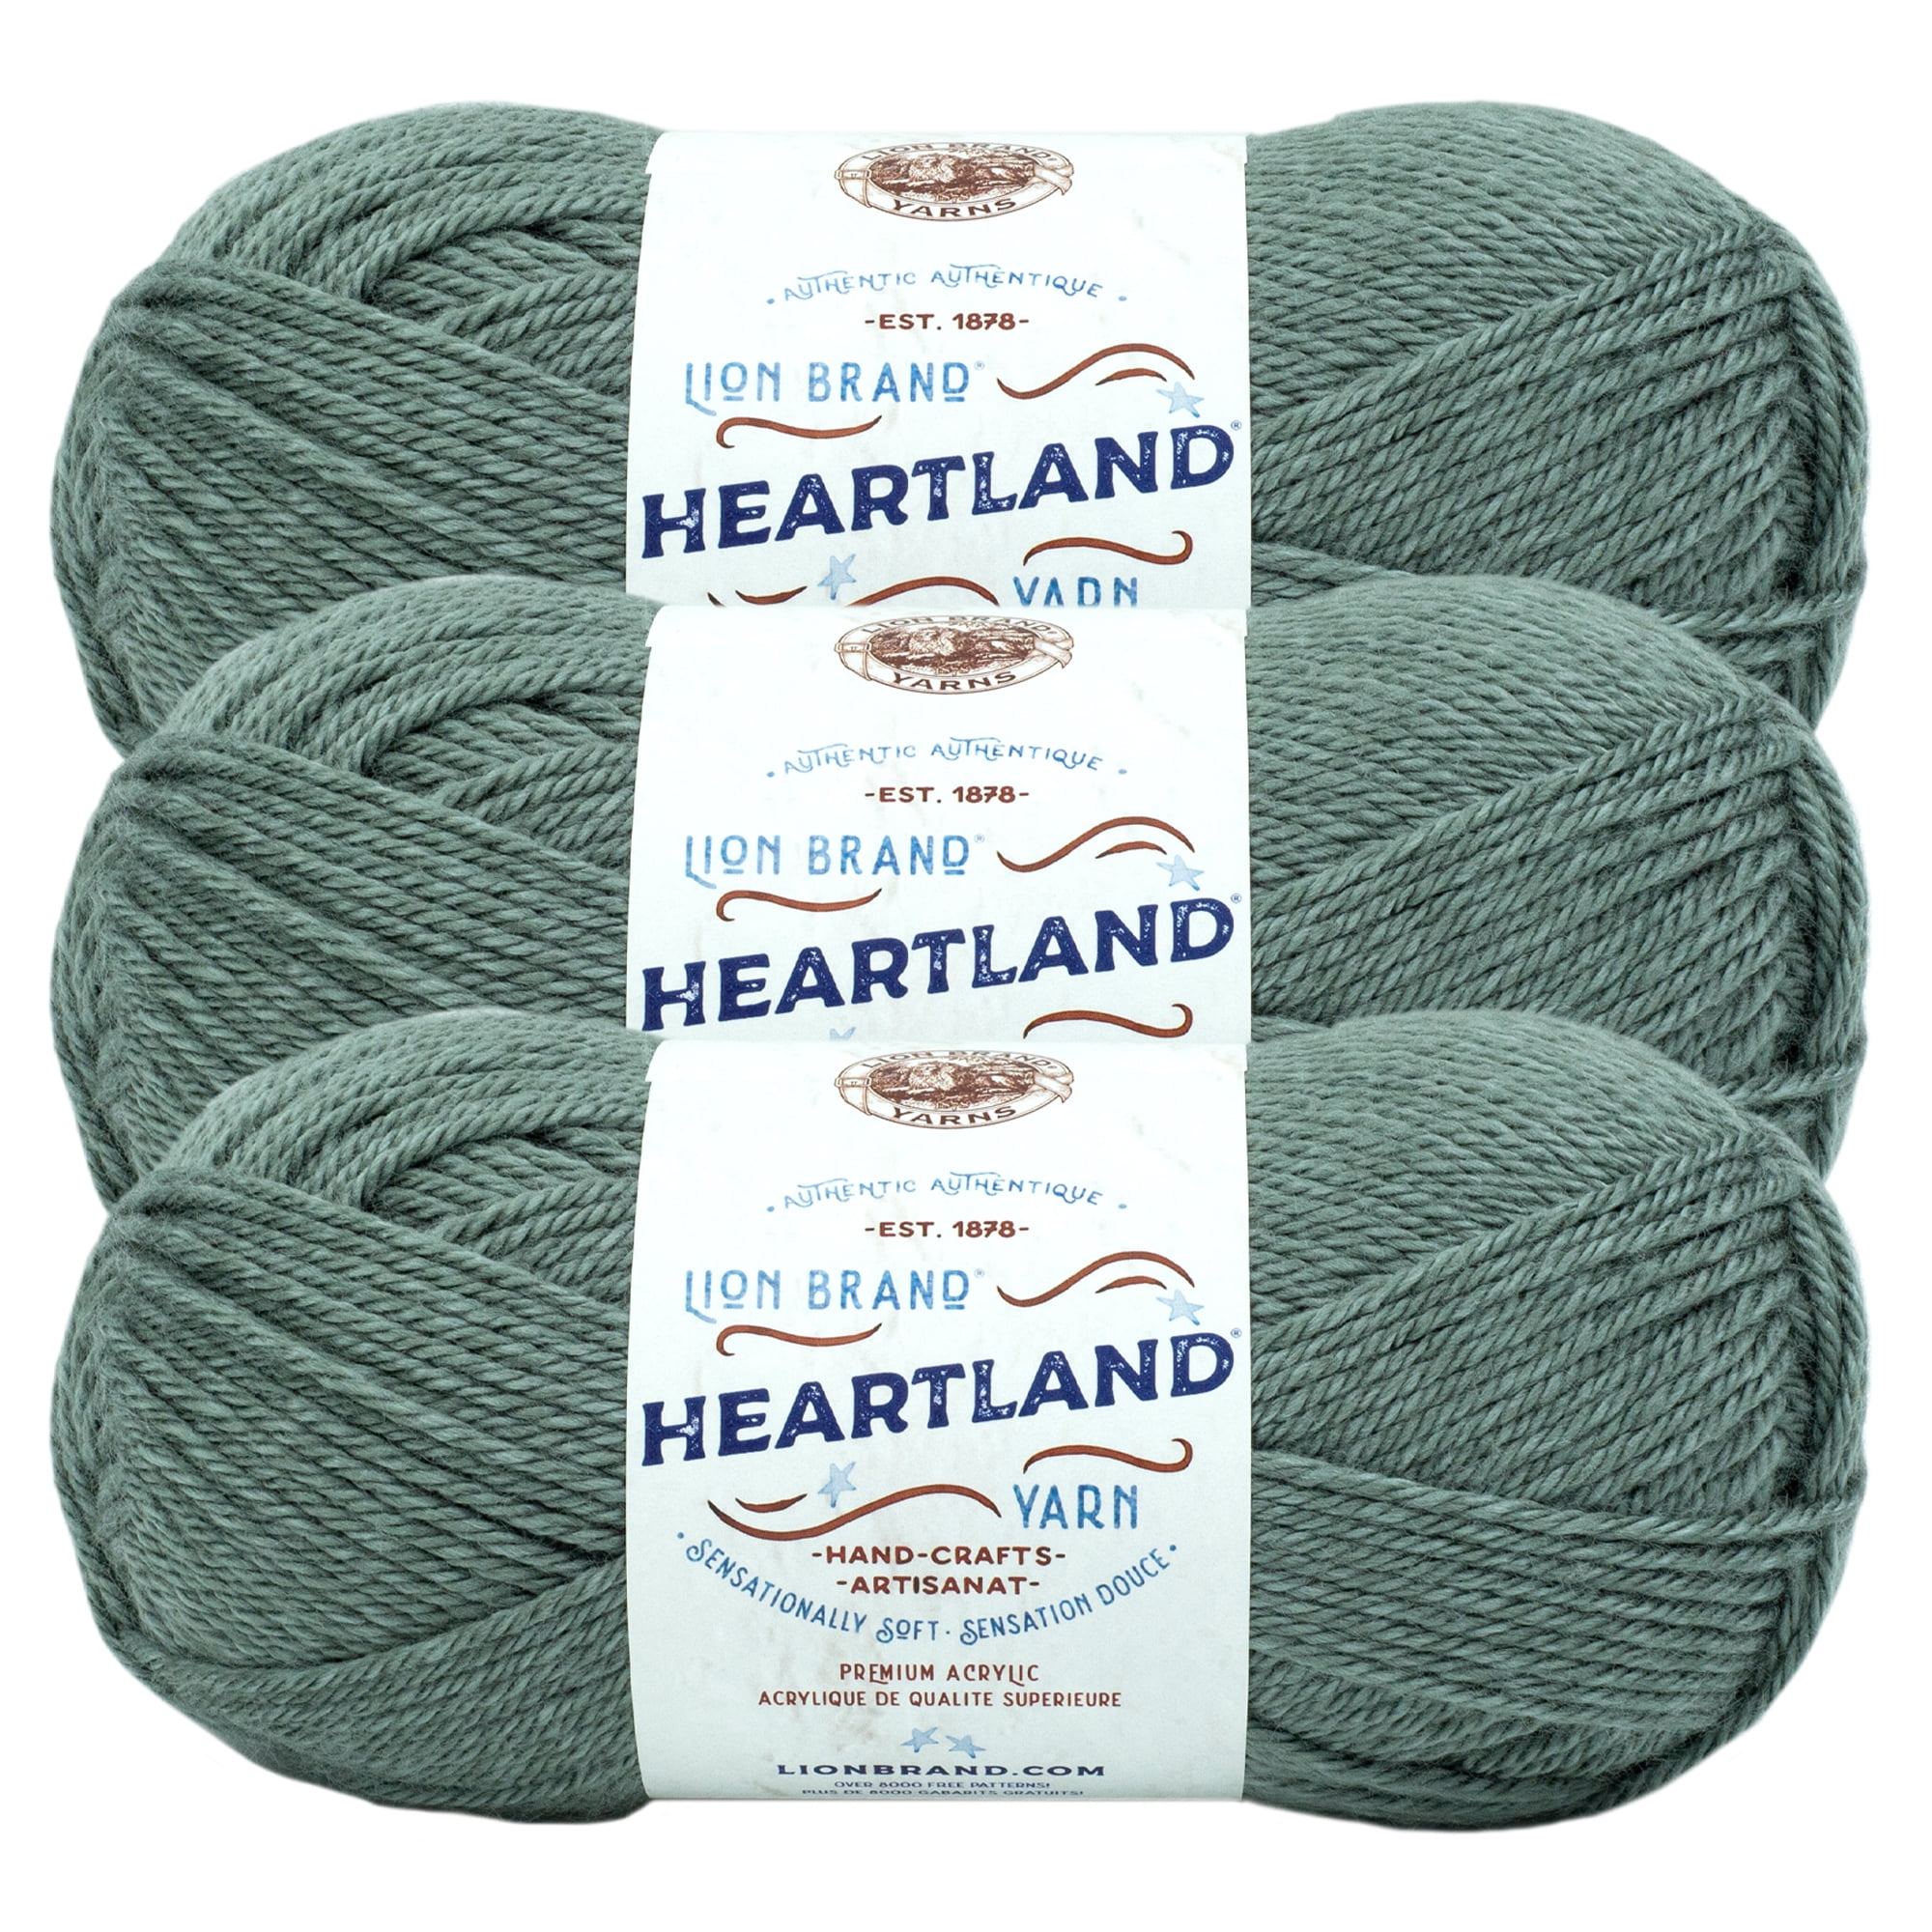 Lion Brand 15 pack: lion brand heartland yarn